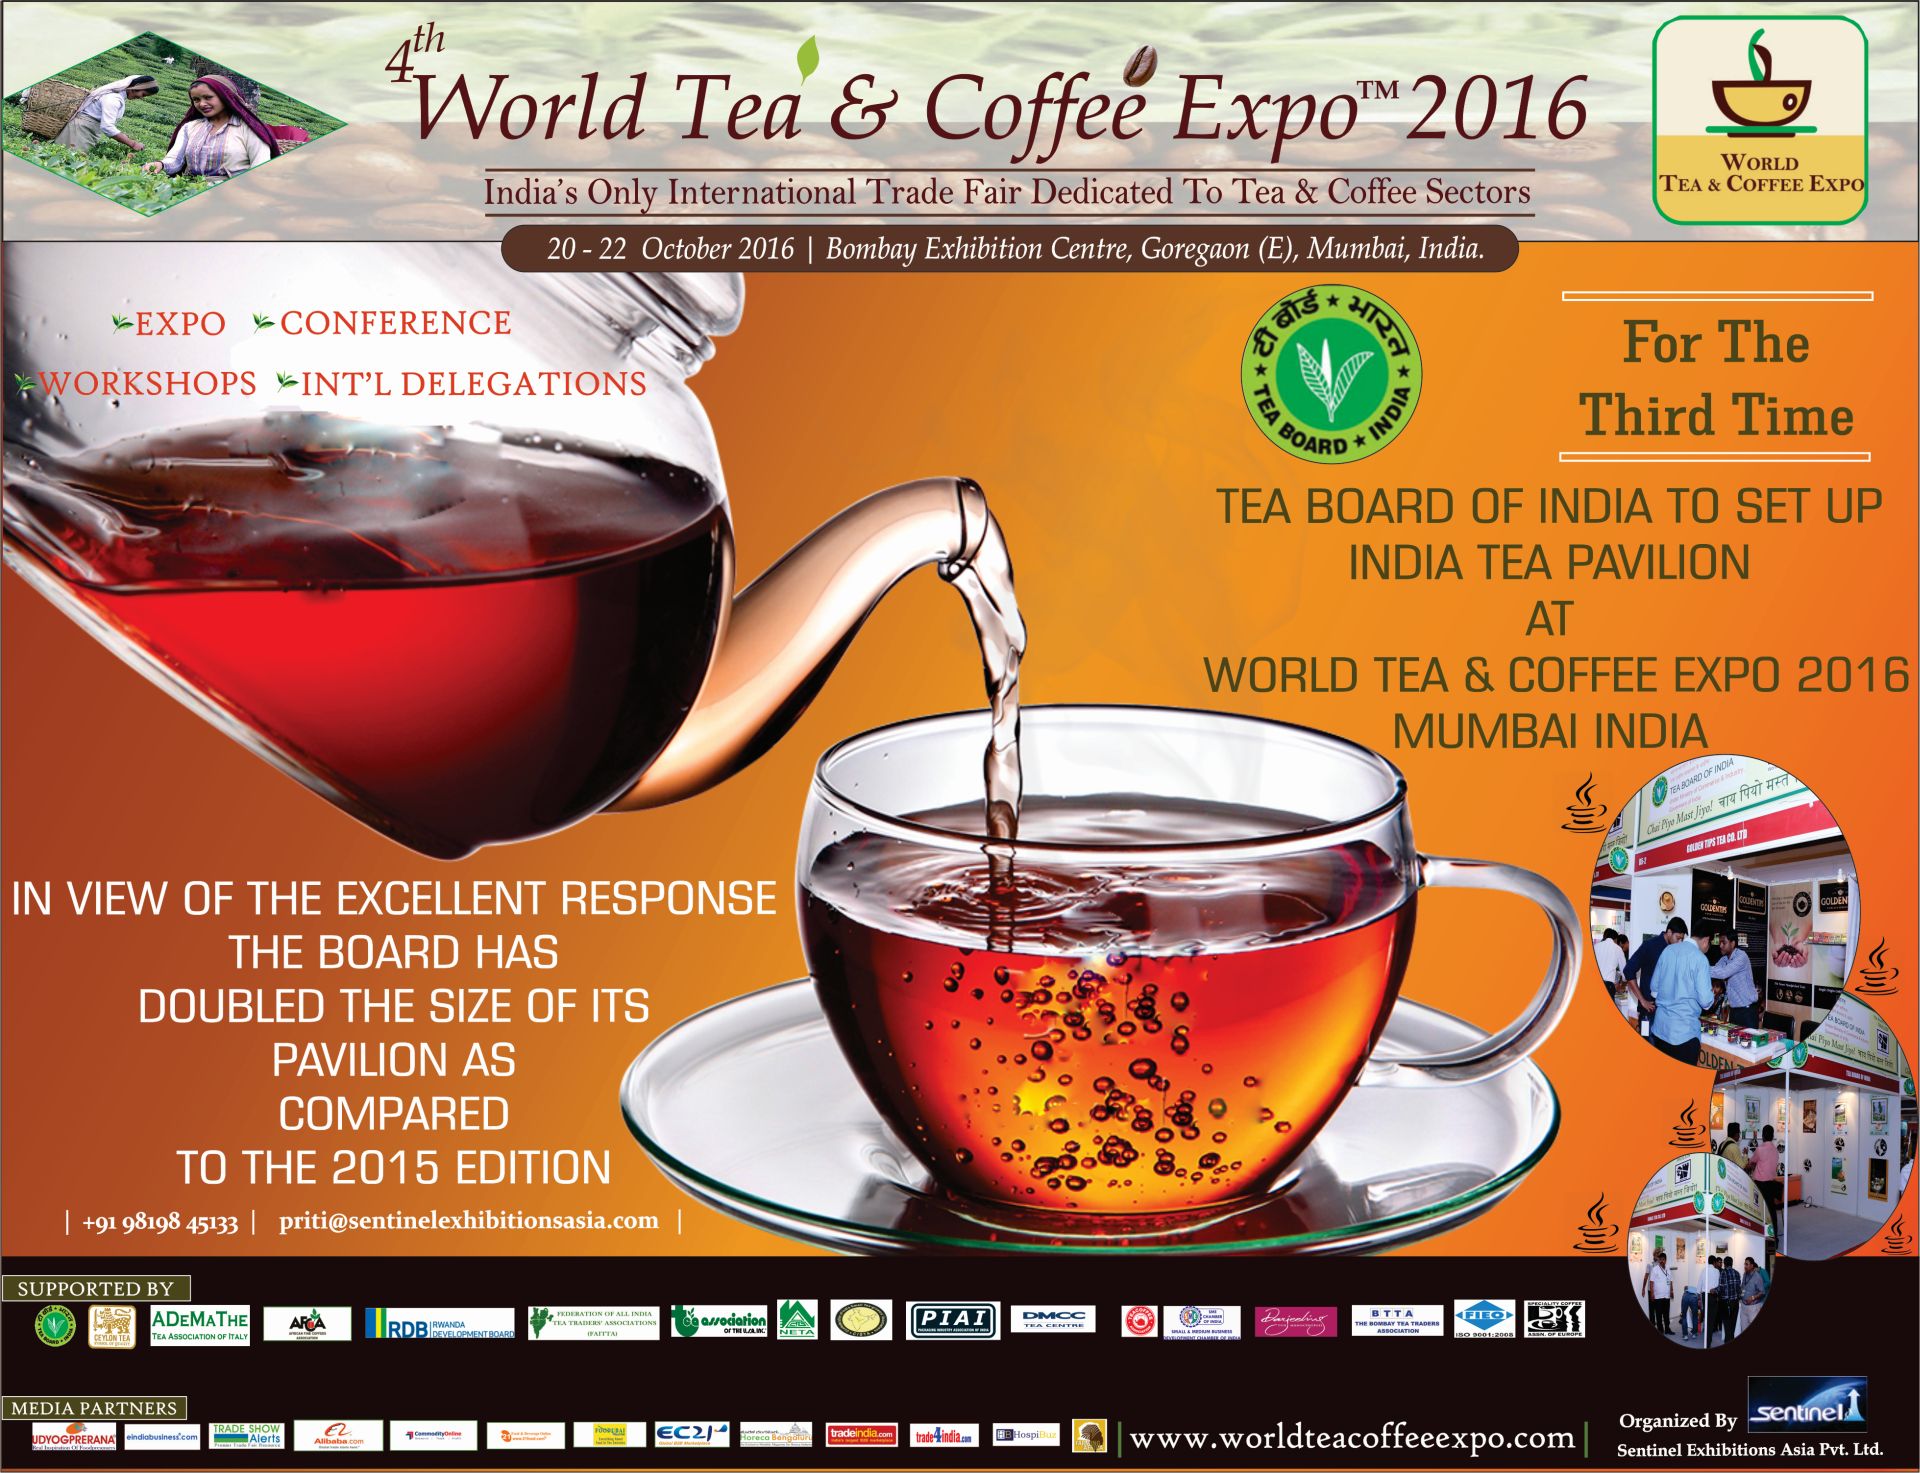 Tea Board Pavilion at World Tea & Coffee Expo 2016